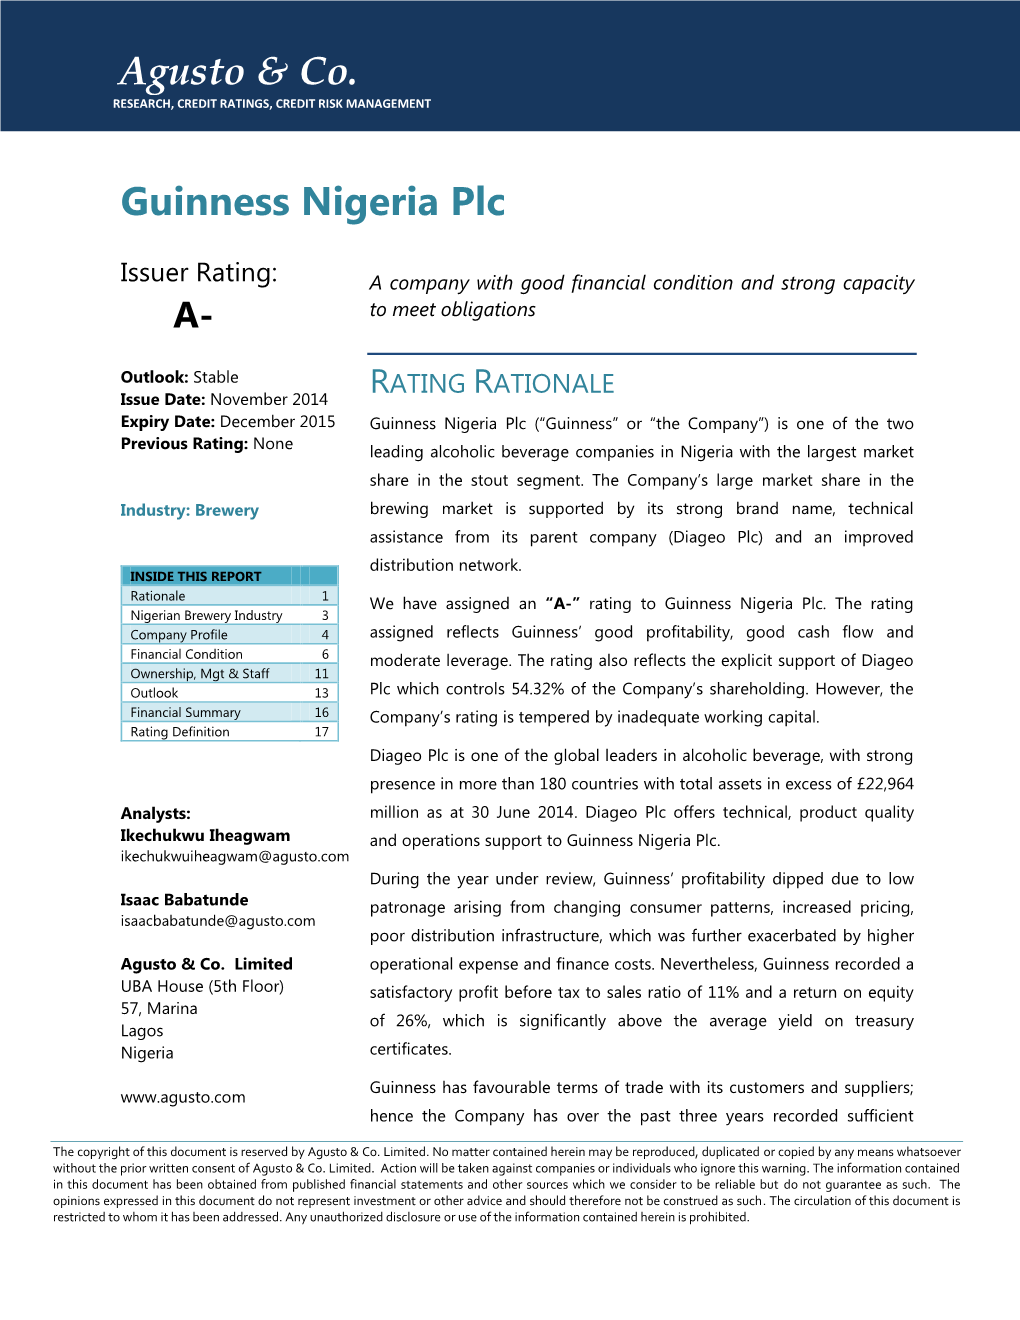 Agusto & Co. Guinness Nigeria